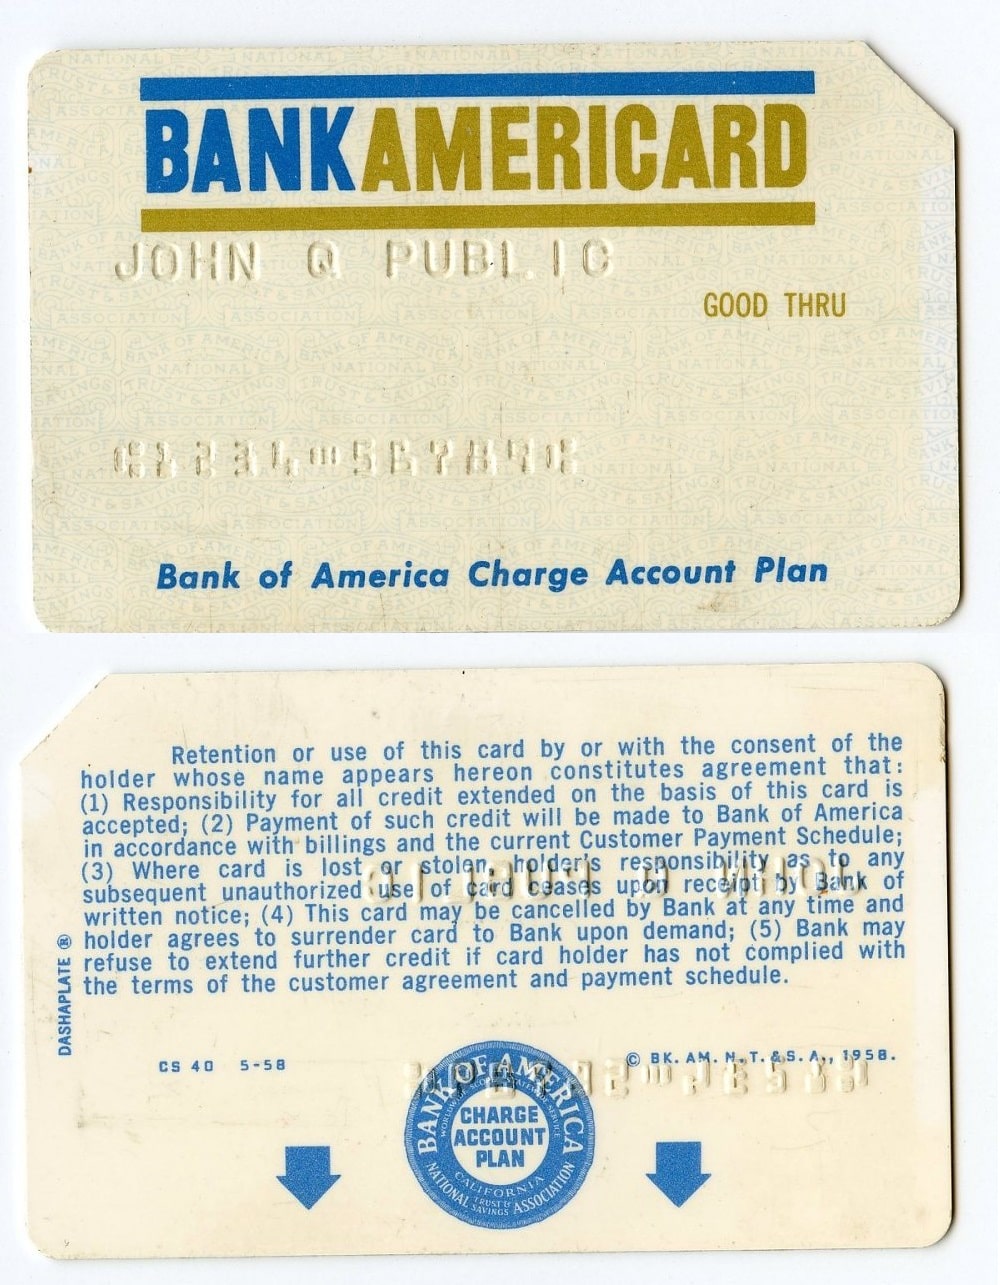 bank of america history